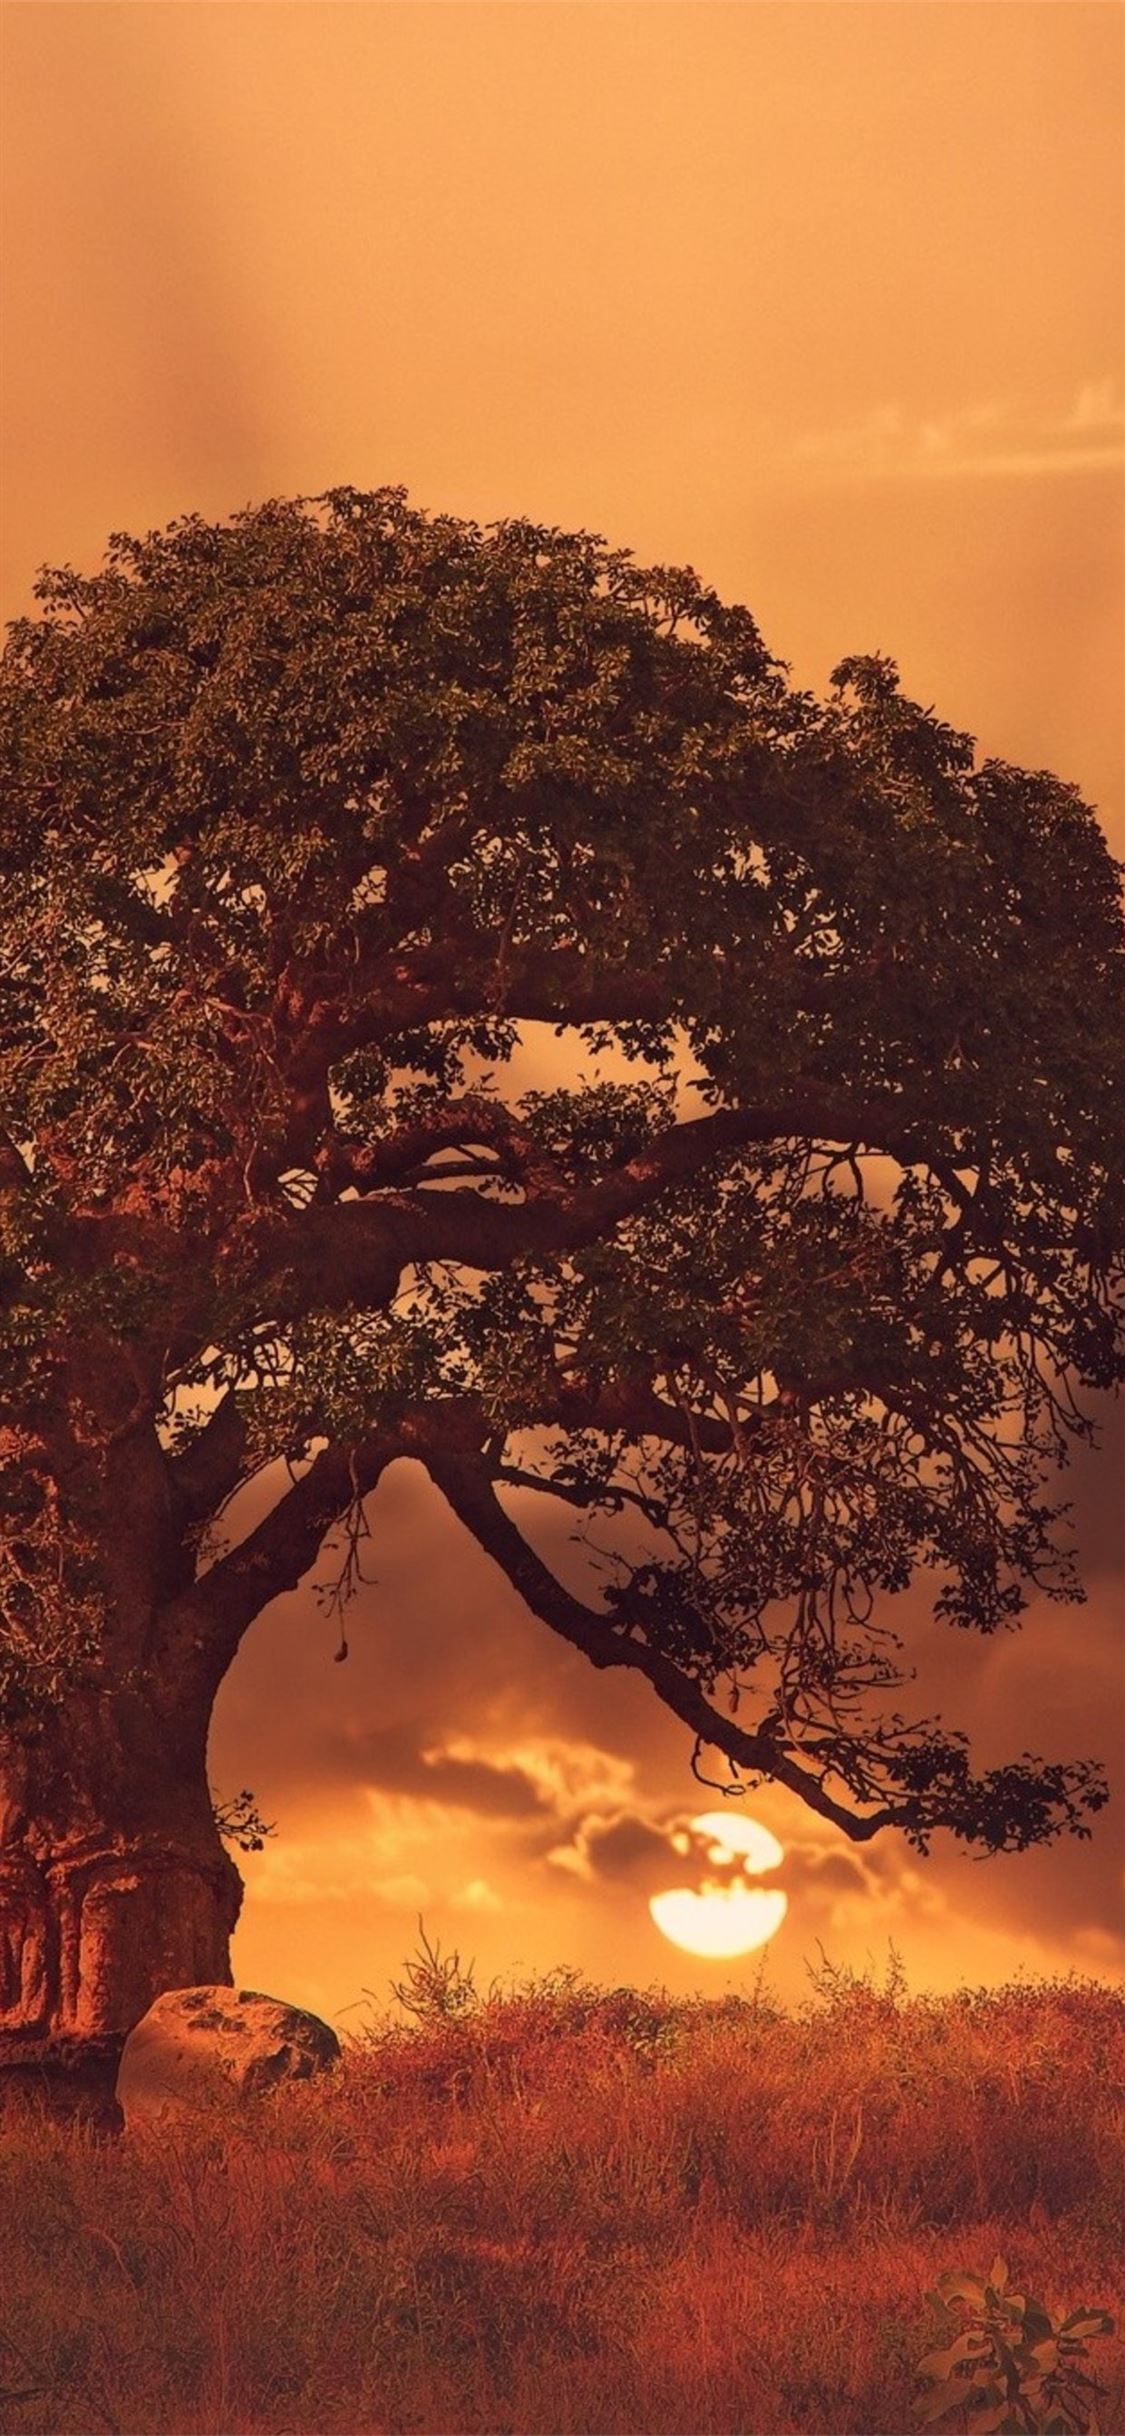 baobab tree sybset iPhone X Wallpaper Free Download